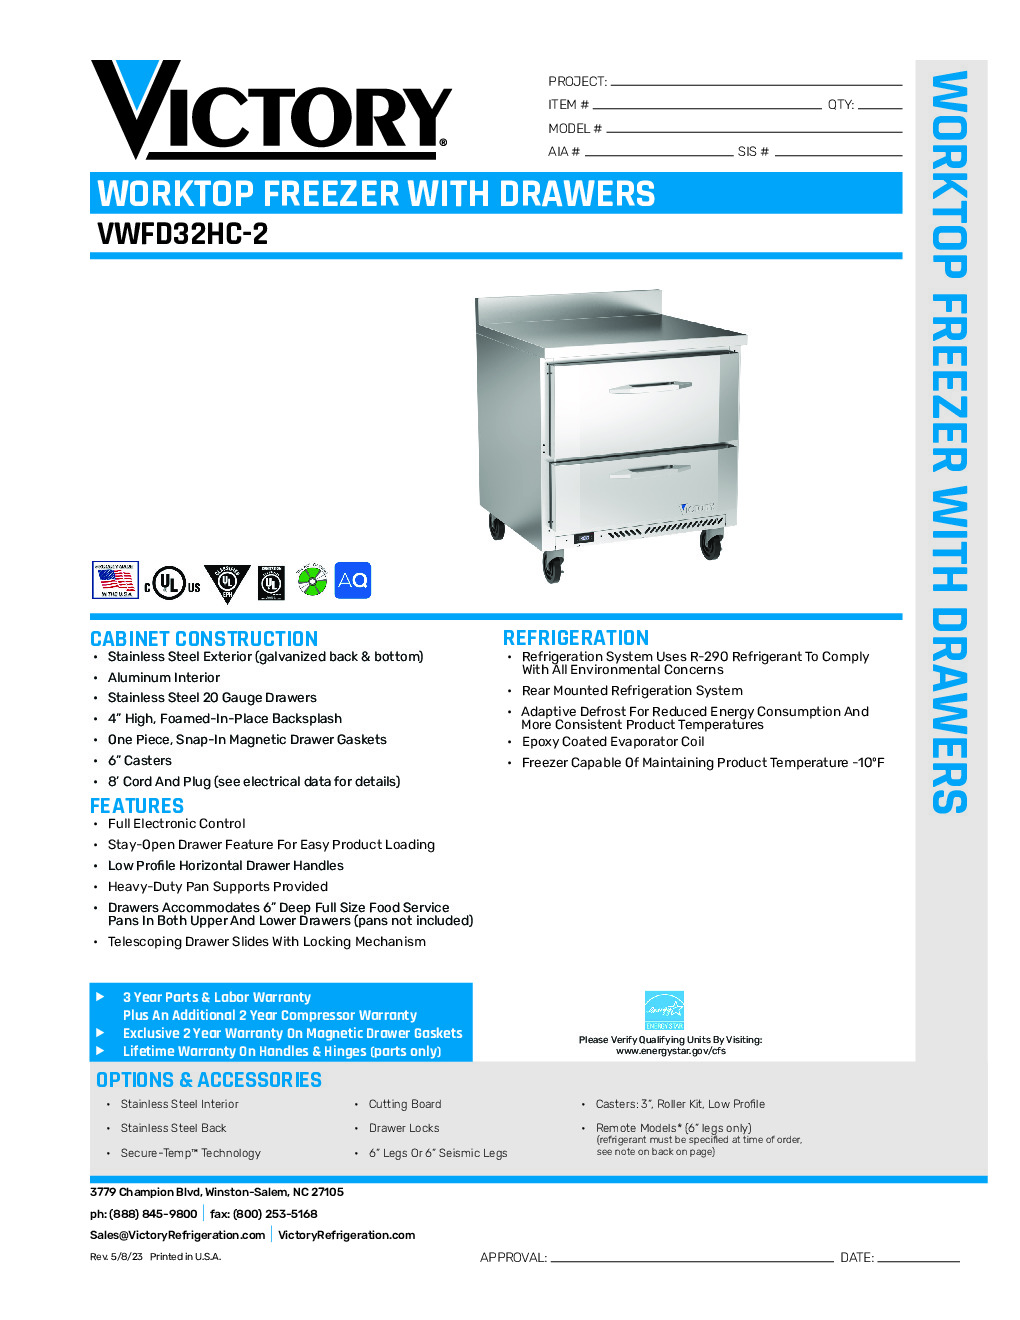 Victory VWFD32HC-2 Work Top Freezer Counter